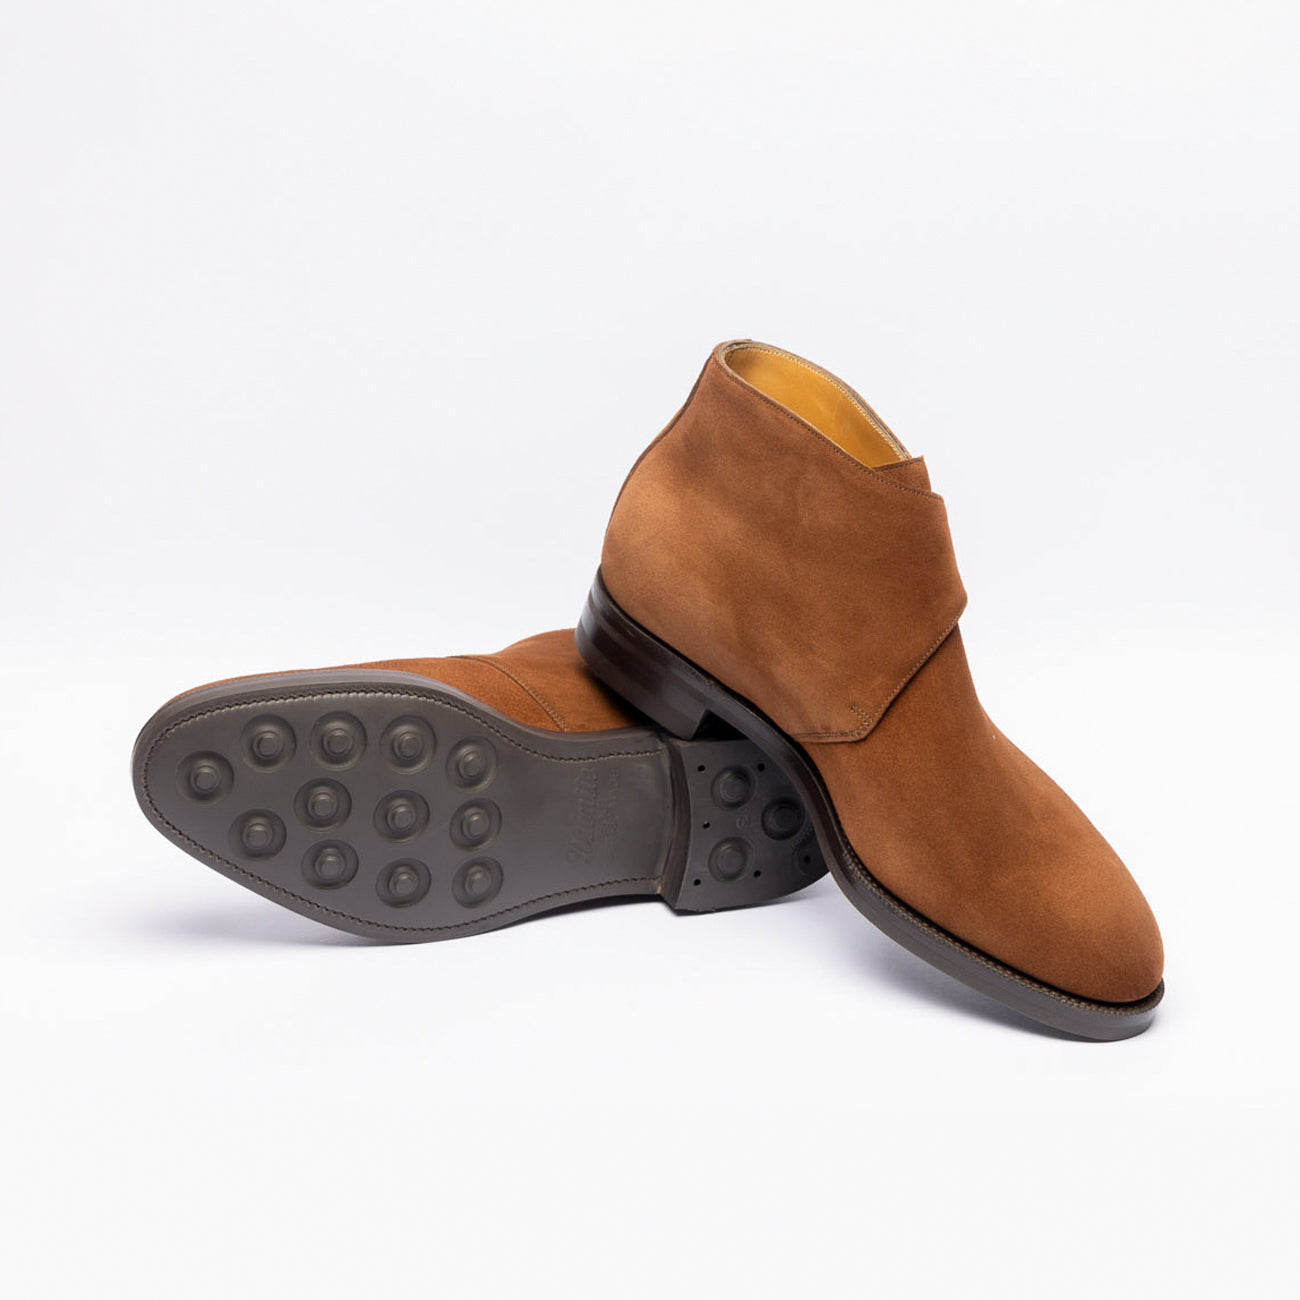 Edward Green Ravenstone single buckle boot in brown suede (Snuff suede)